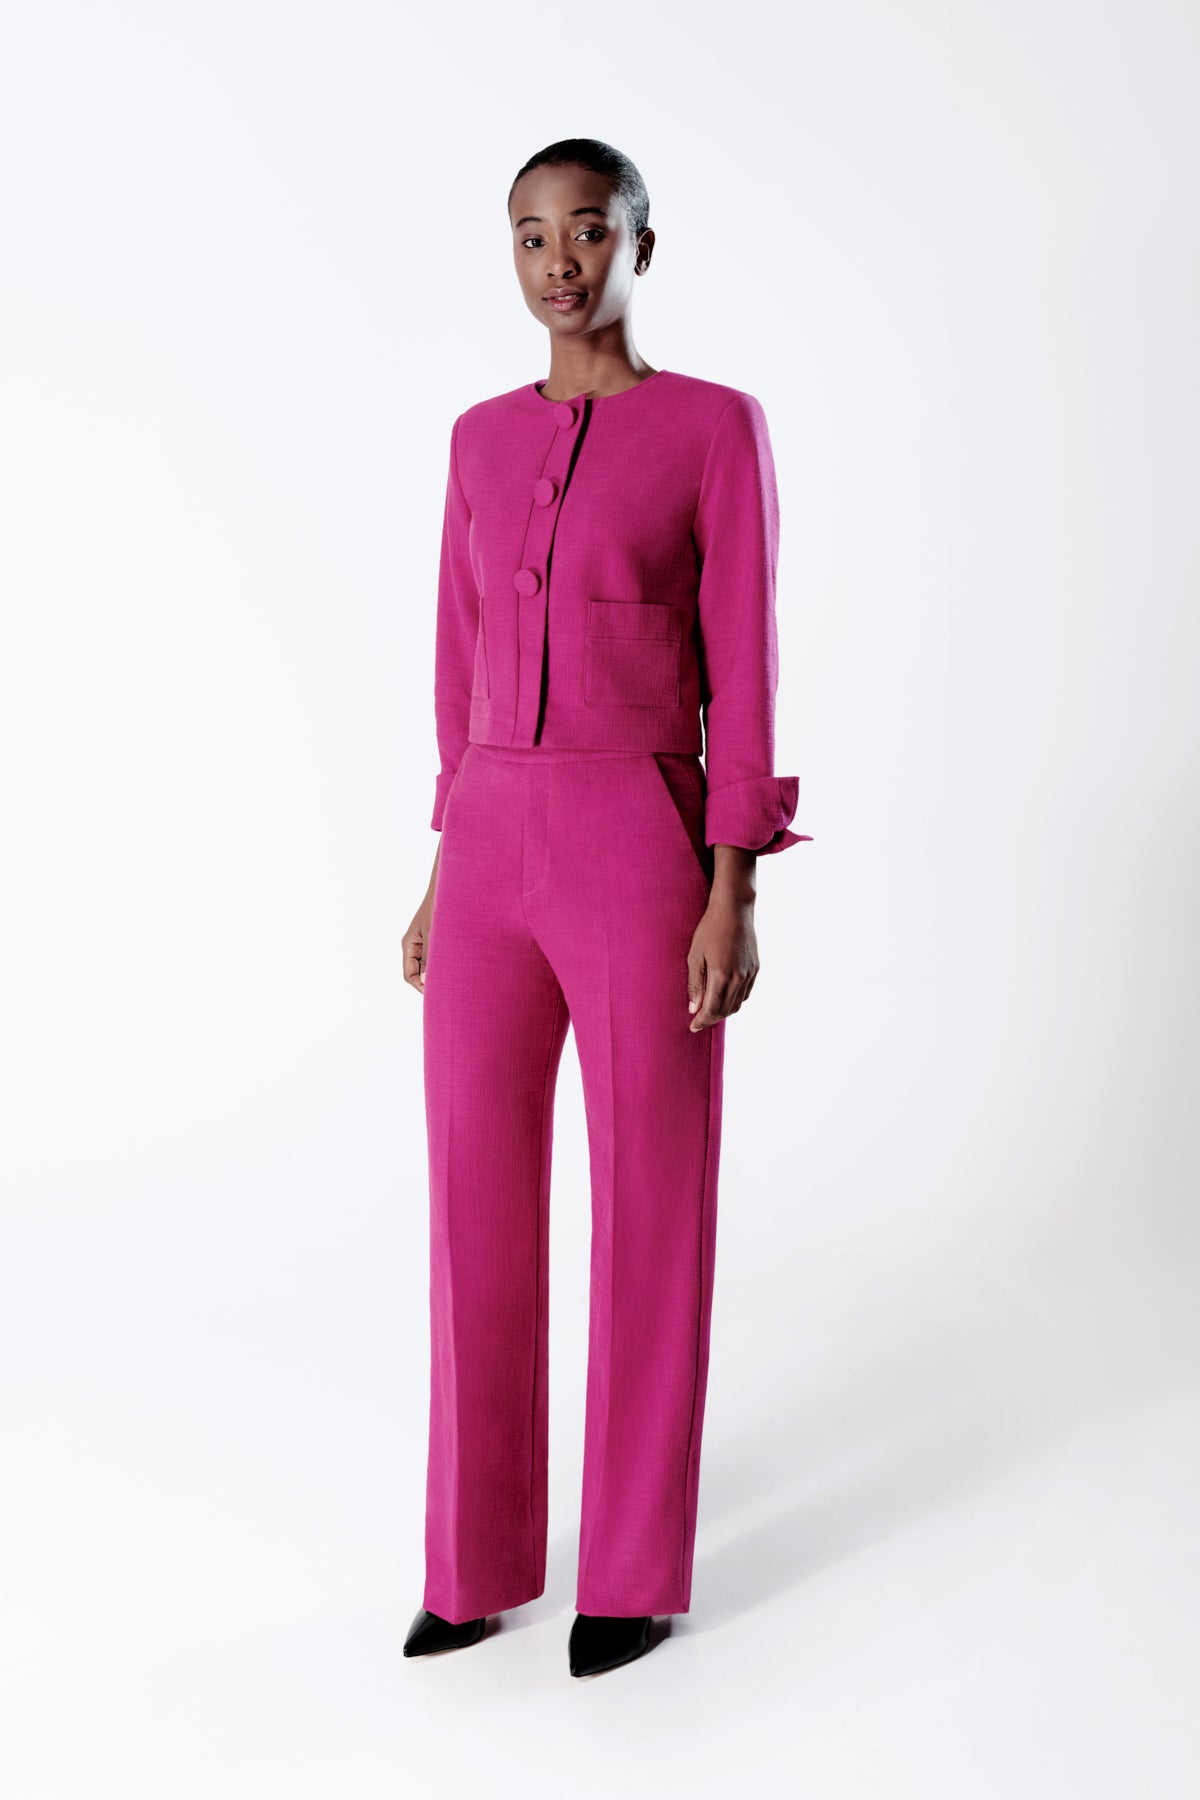 Hot Pink Pant Suit - STYLETHEGIRL